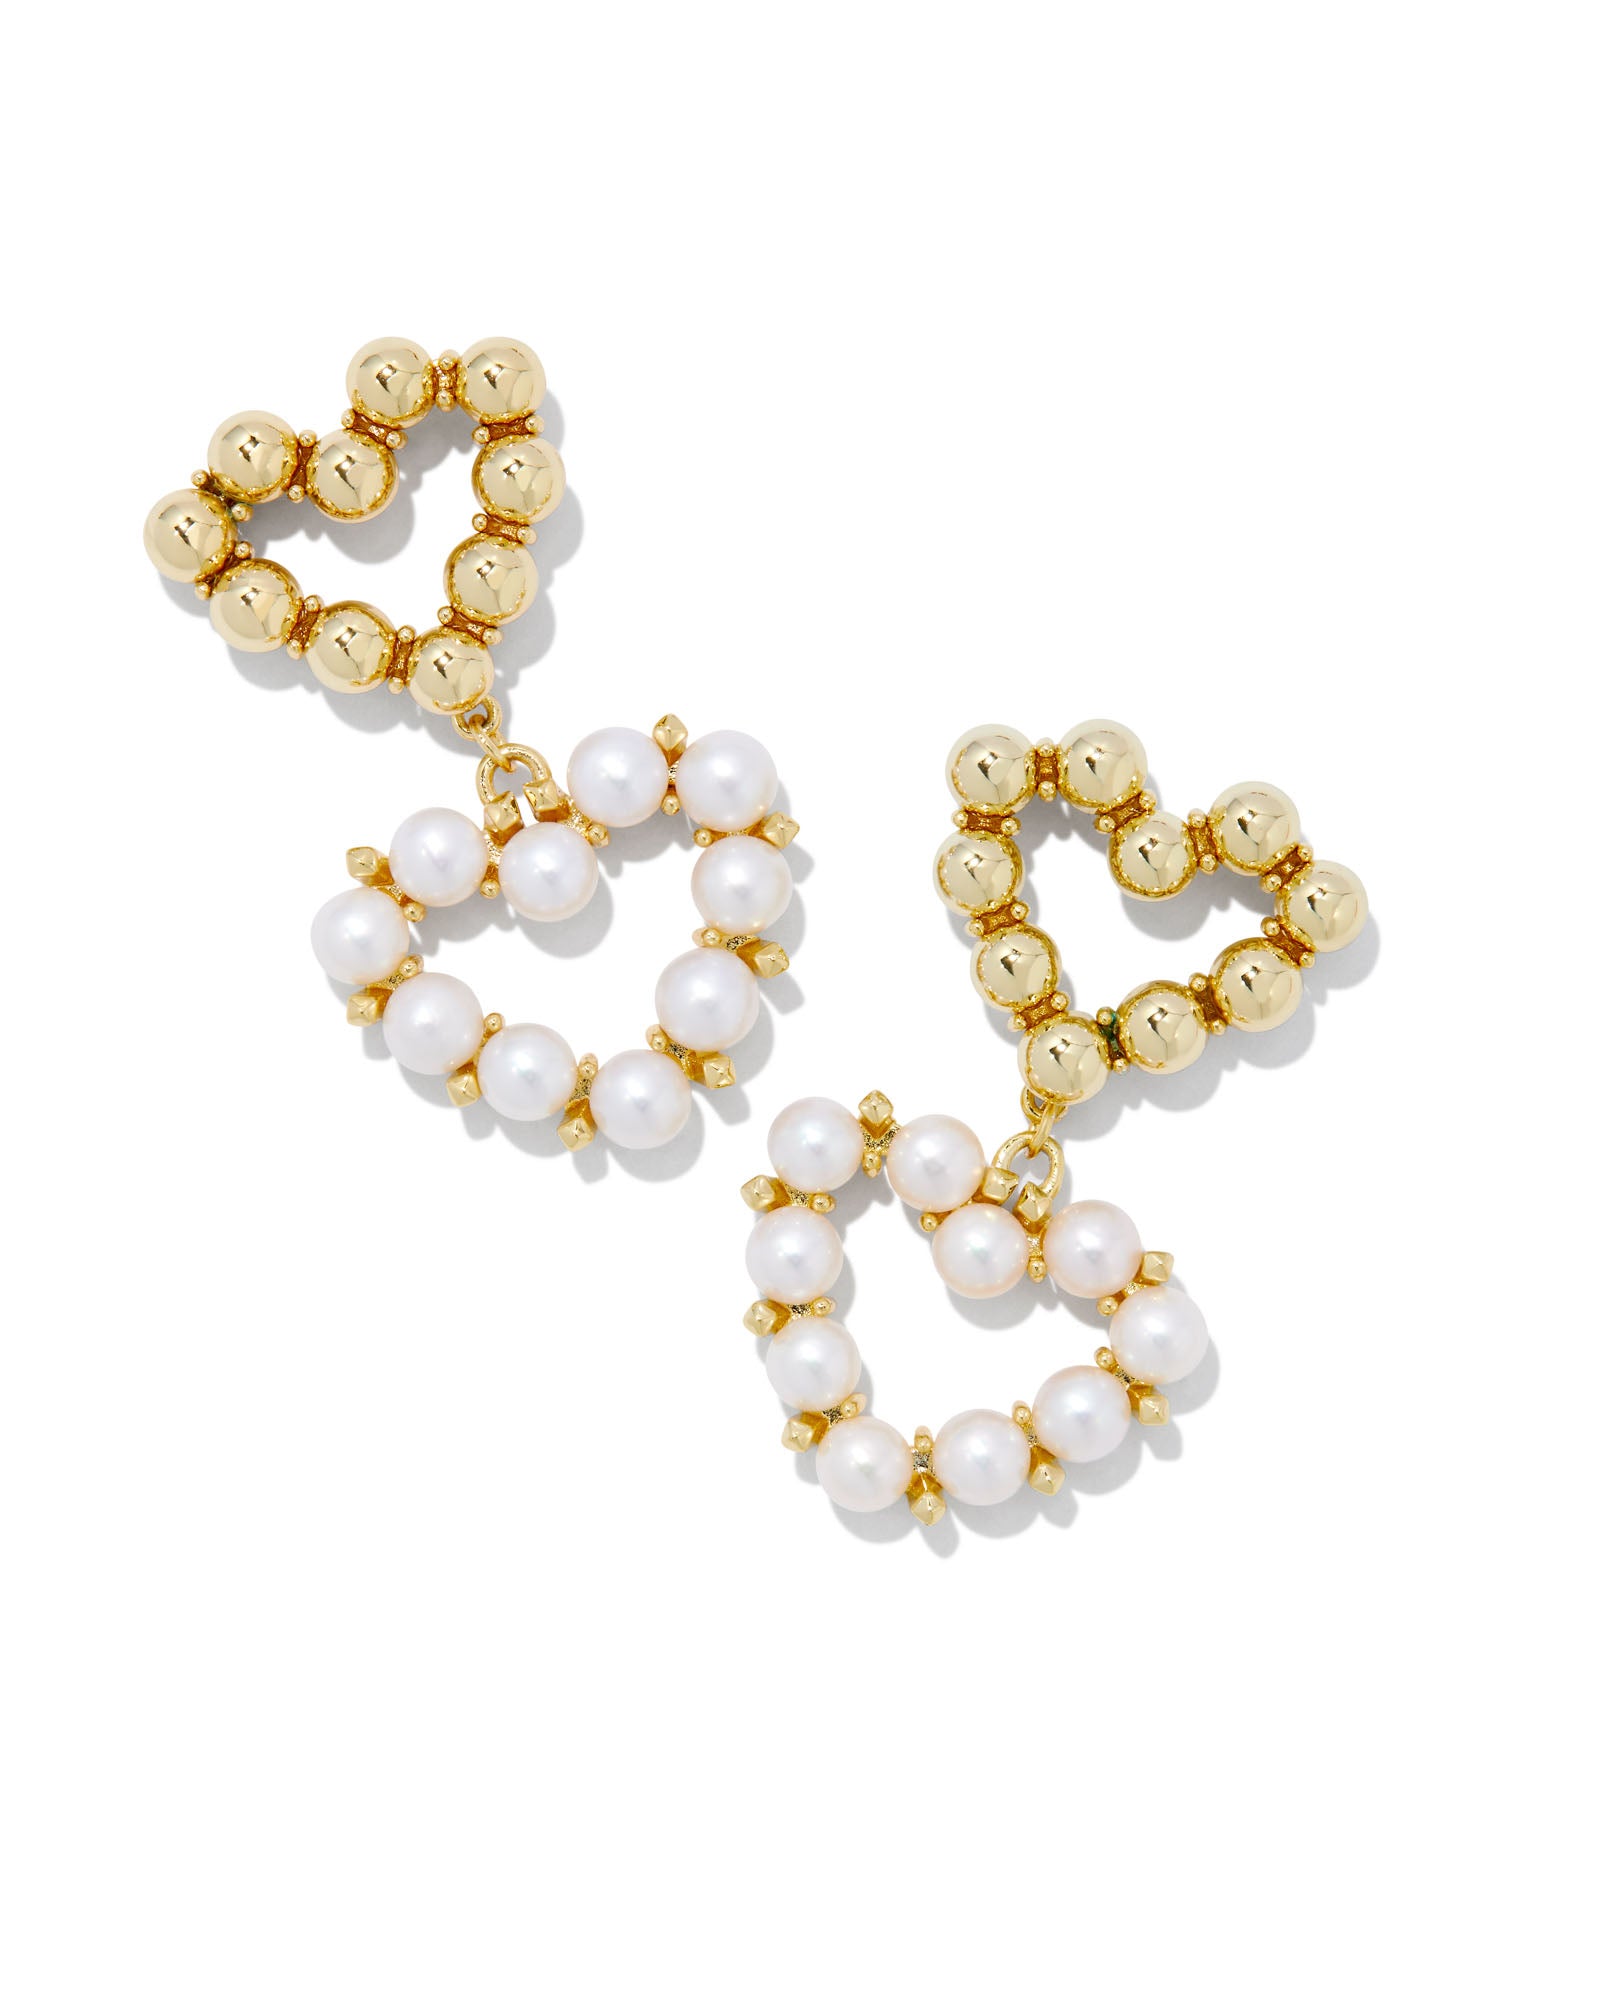 Kendra Scott Ashton Heart Earrings in White Pearl and Gold